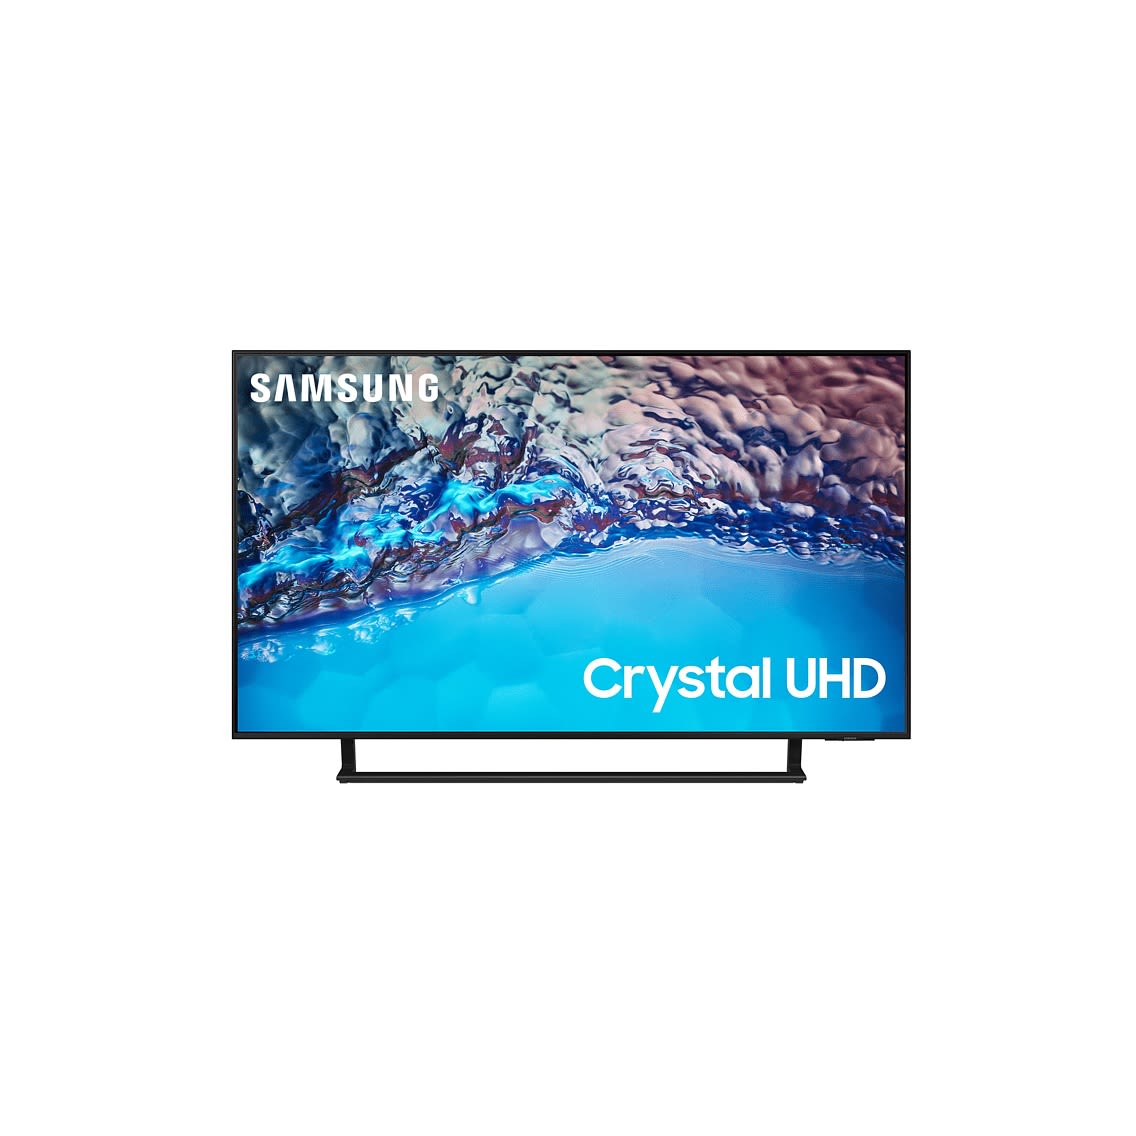 crystal uhd / tv / samsung